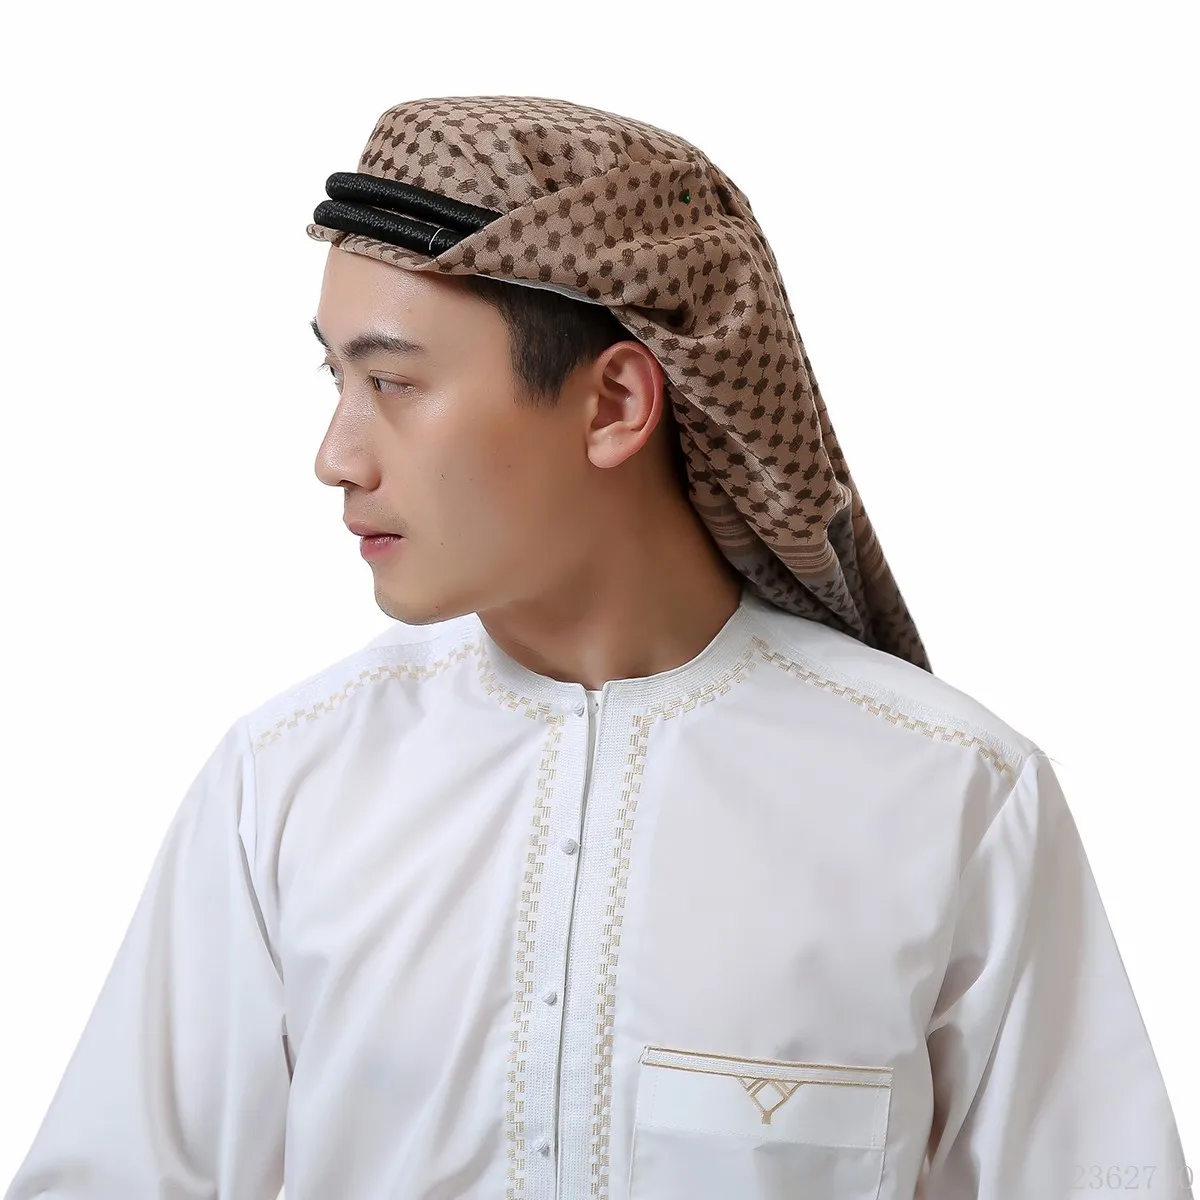 Lenço árabe Keffiyeh para homem, hijab muçulmano, turbante islâmico, árabe saudita, envoltório de cabeça masculino, lenços do Oriente Médio, 130x130cm